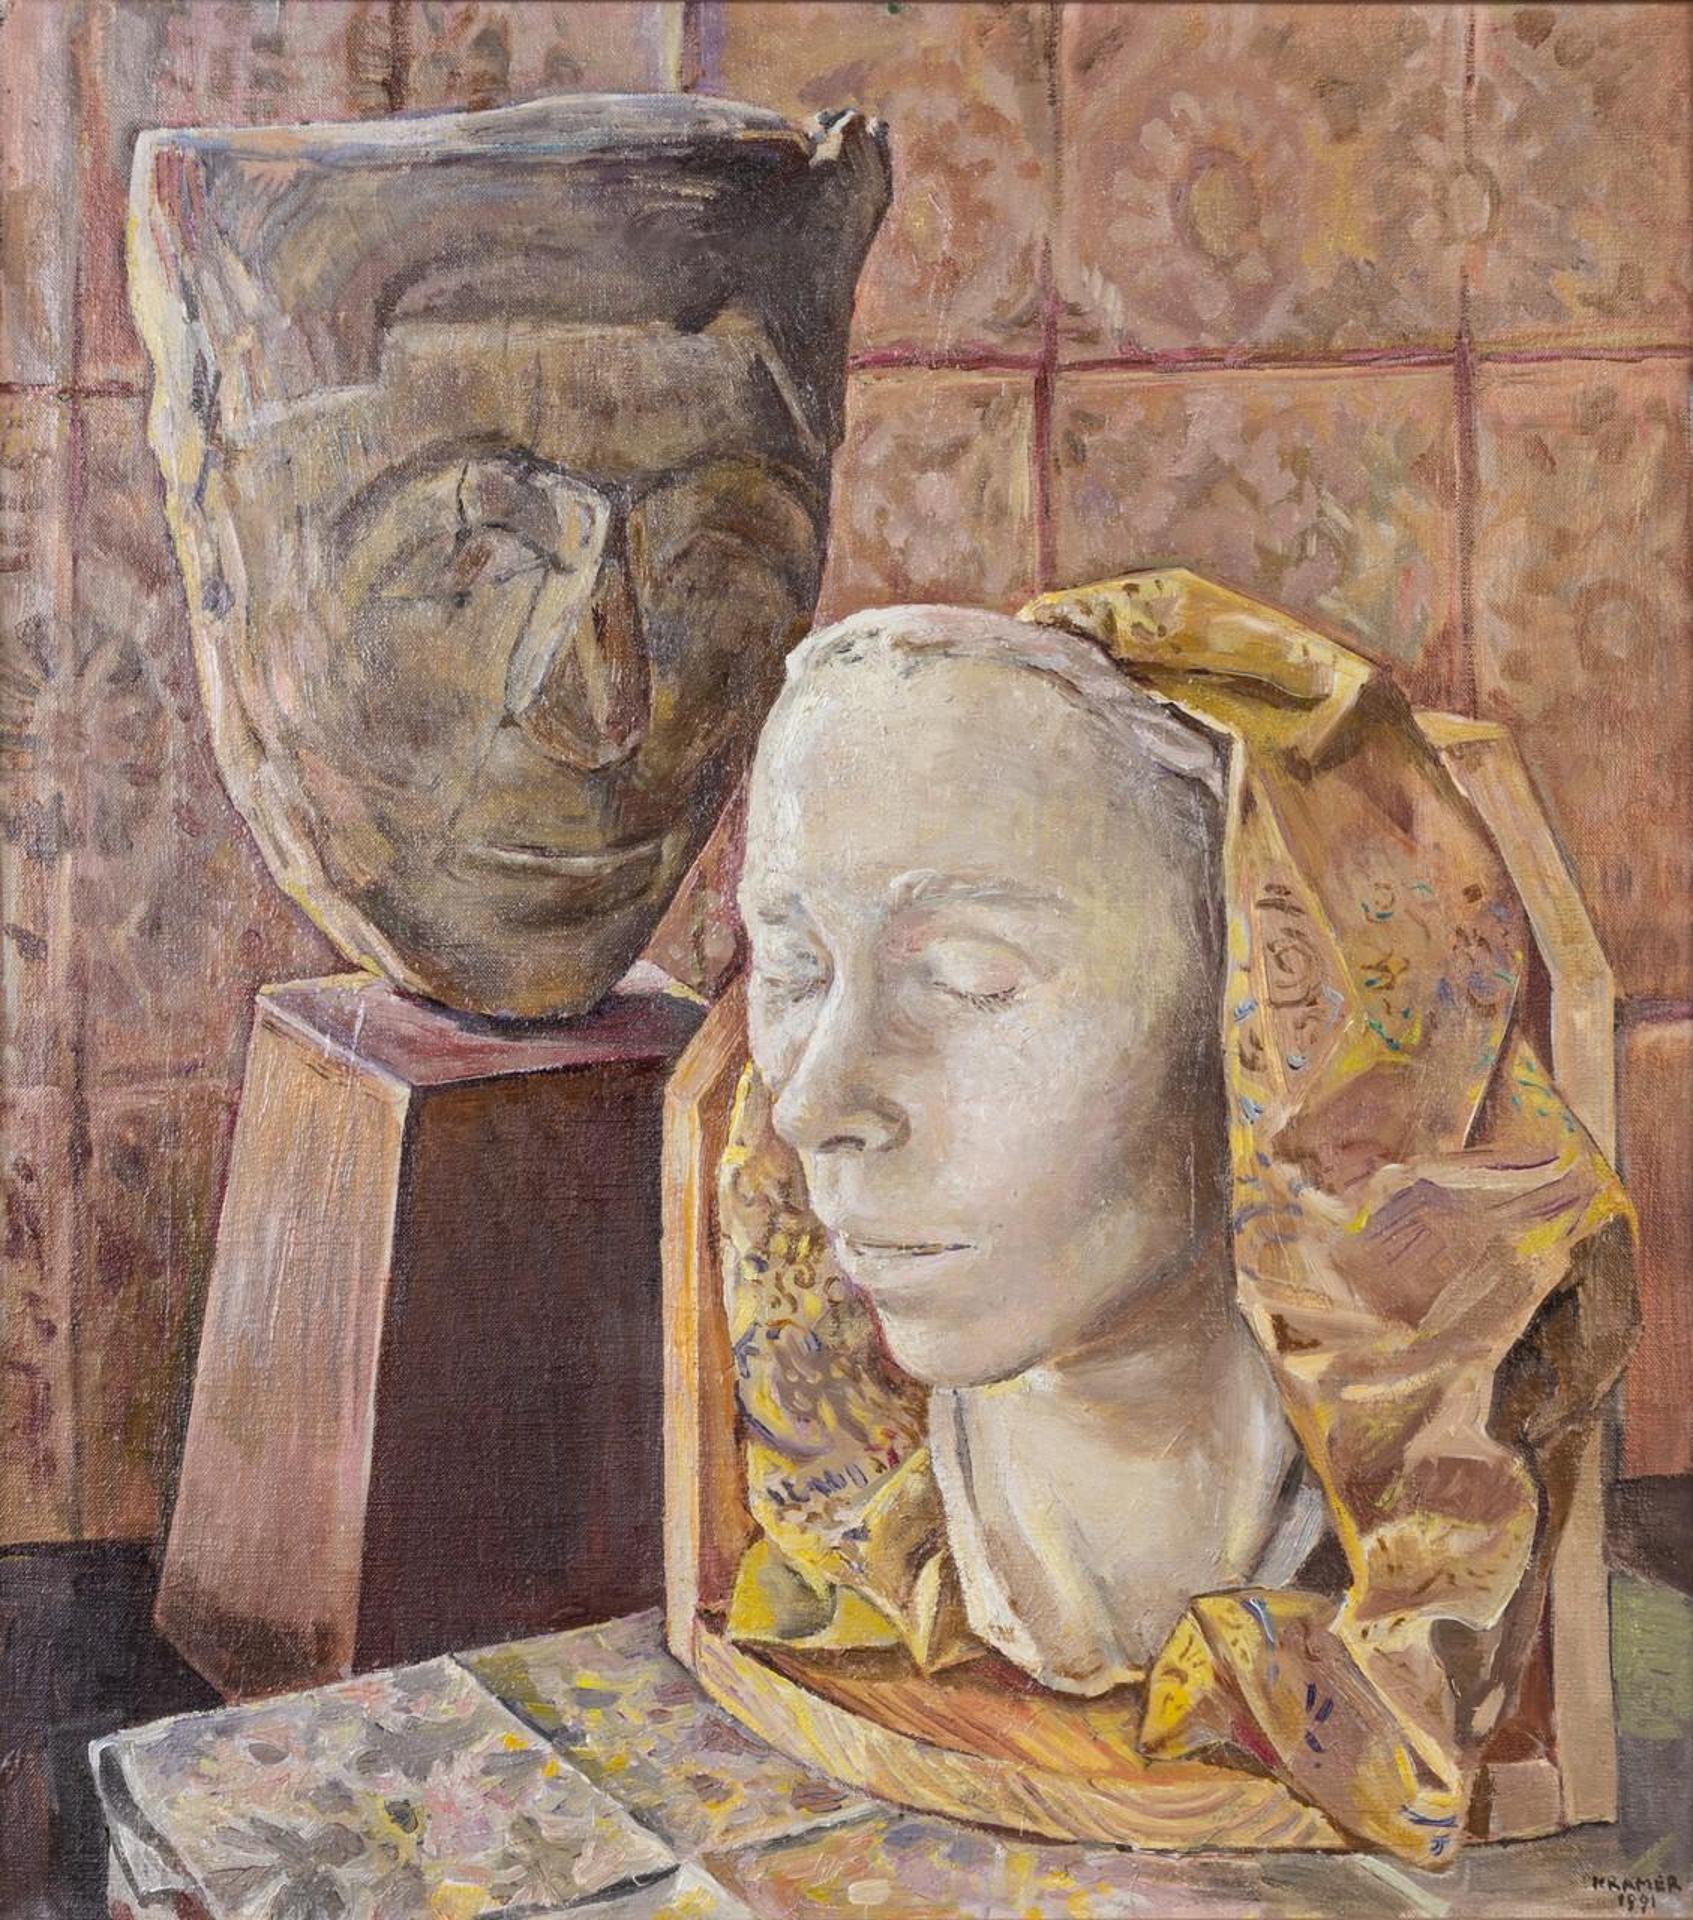 Edith Kramer (1916-2014) - Death Mask and Egyptian Head